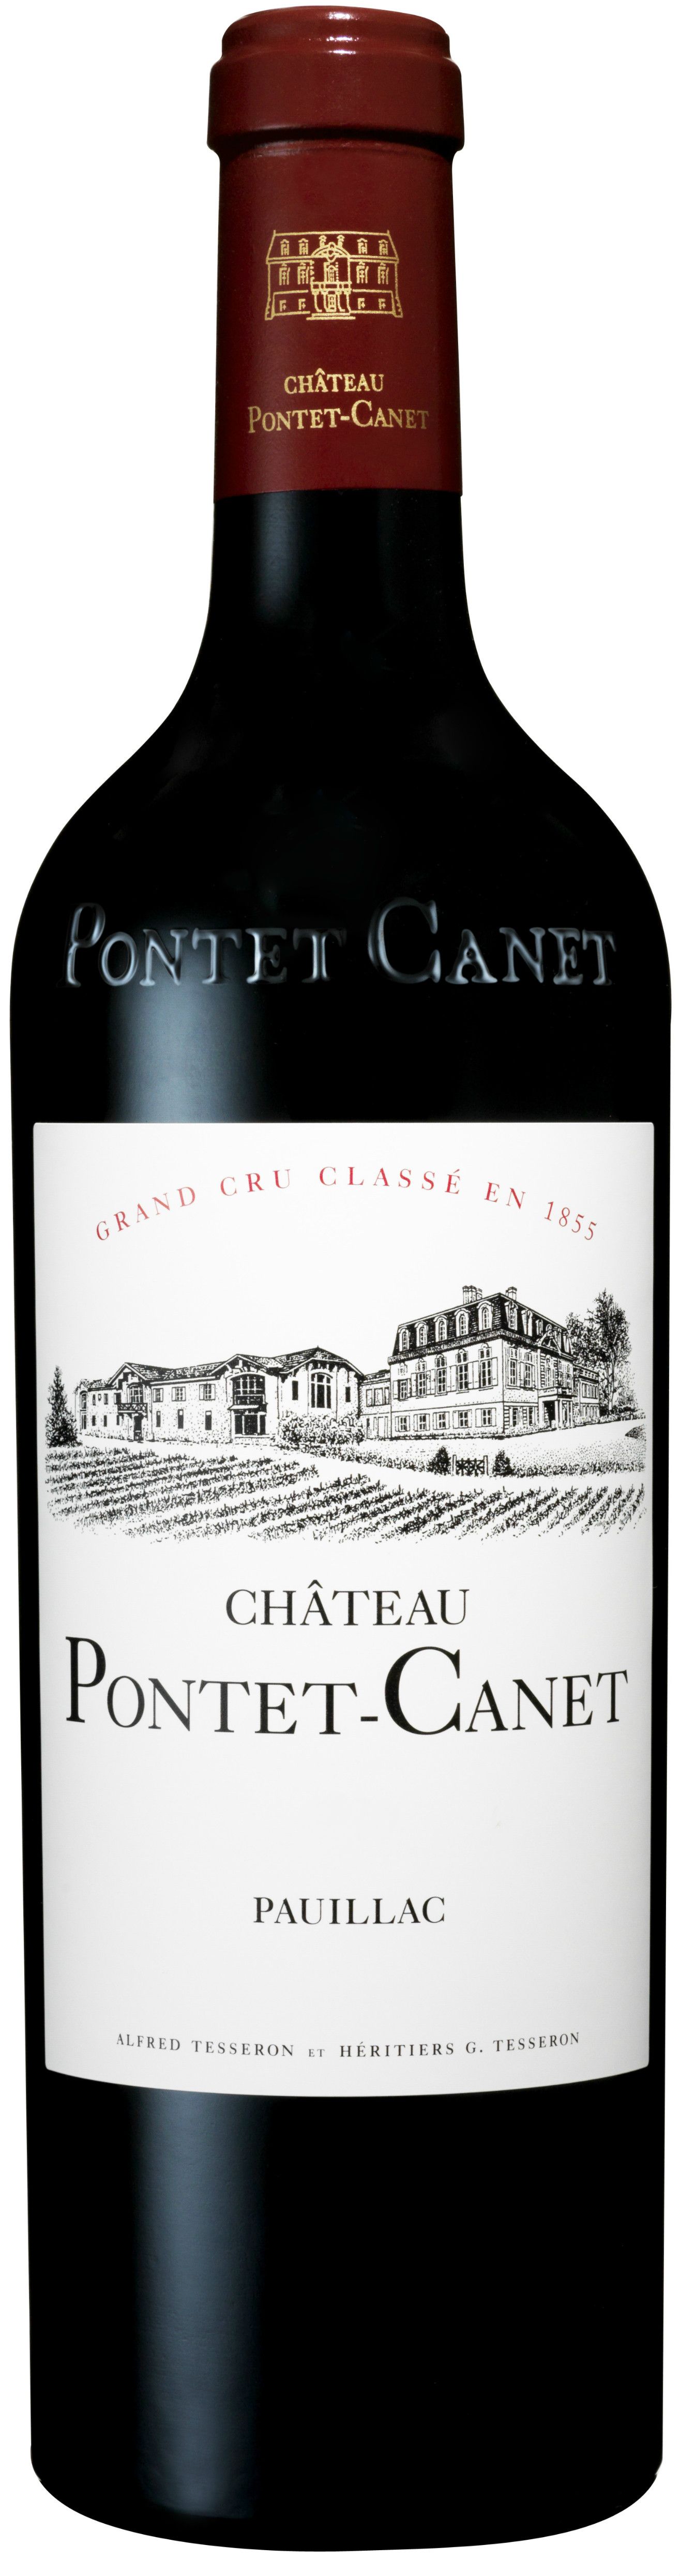 Chateau Pontet-Canet, 2012 (In 6-btls Box Set)